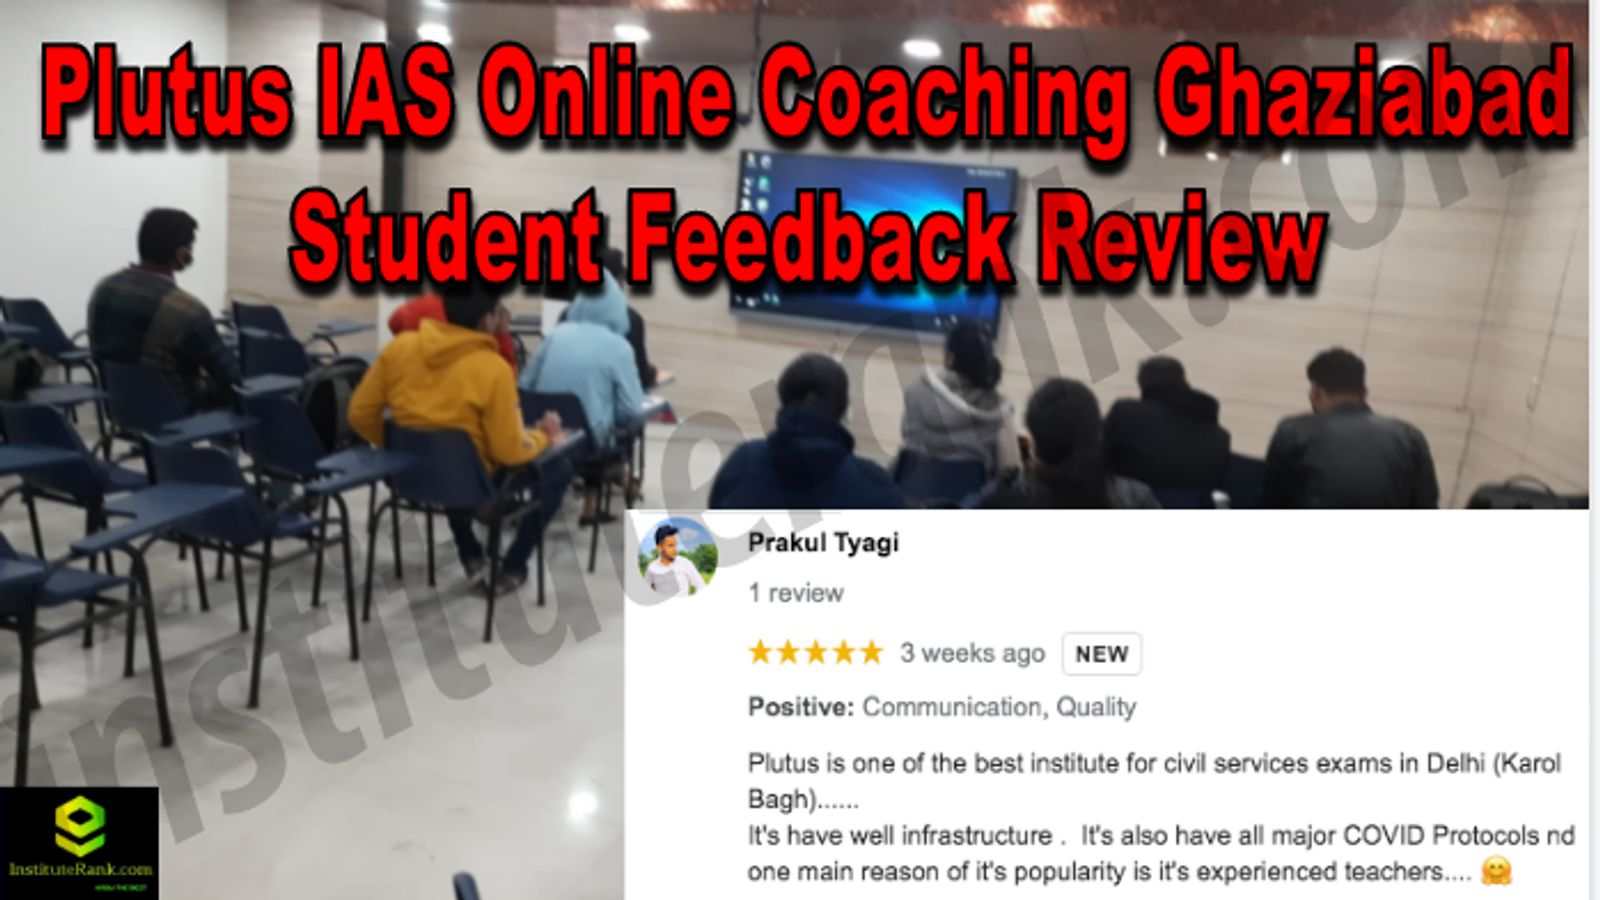 Plutus IAS Online Coaching Ghaziabad Student Feedback Reviews